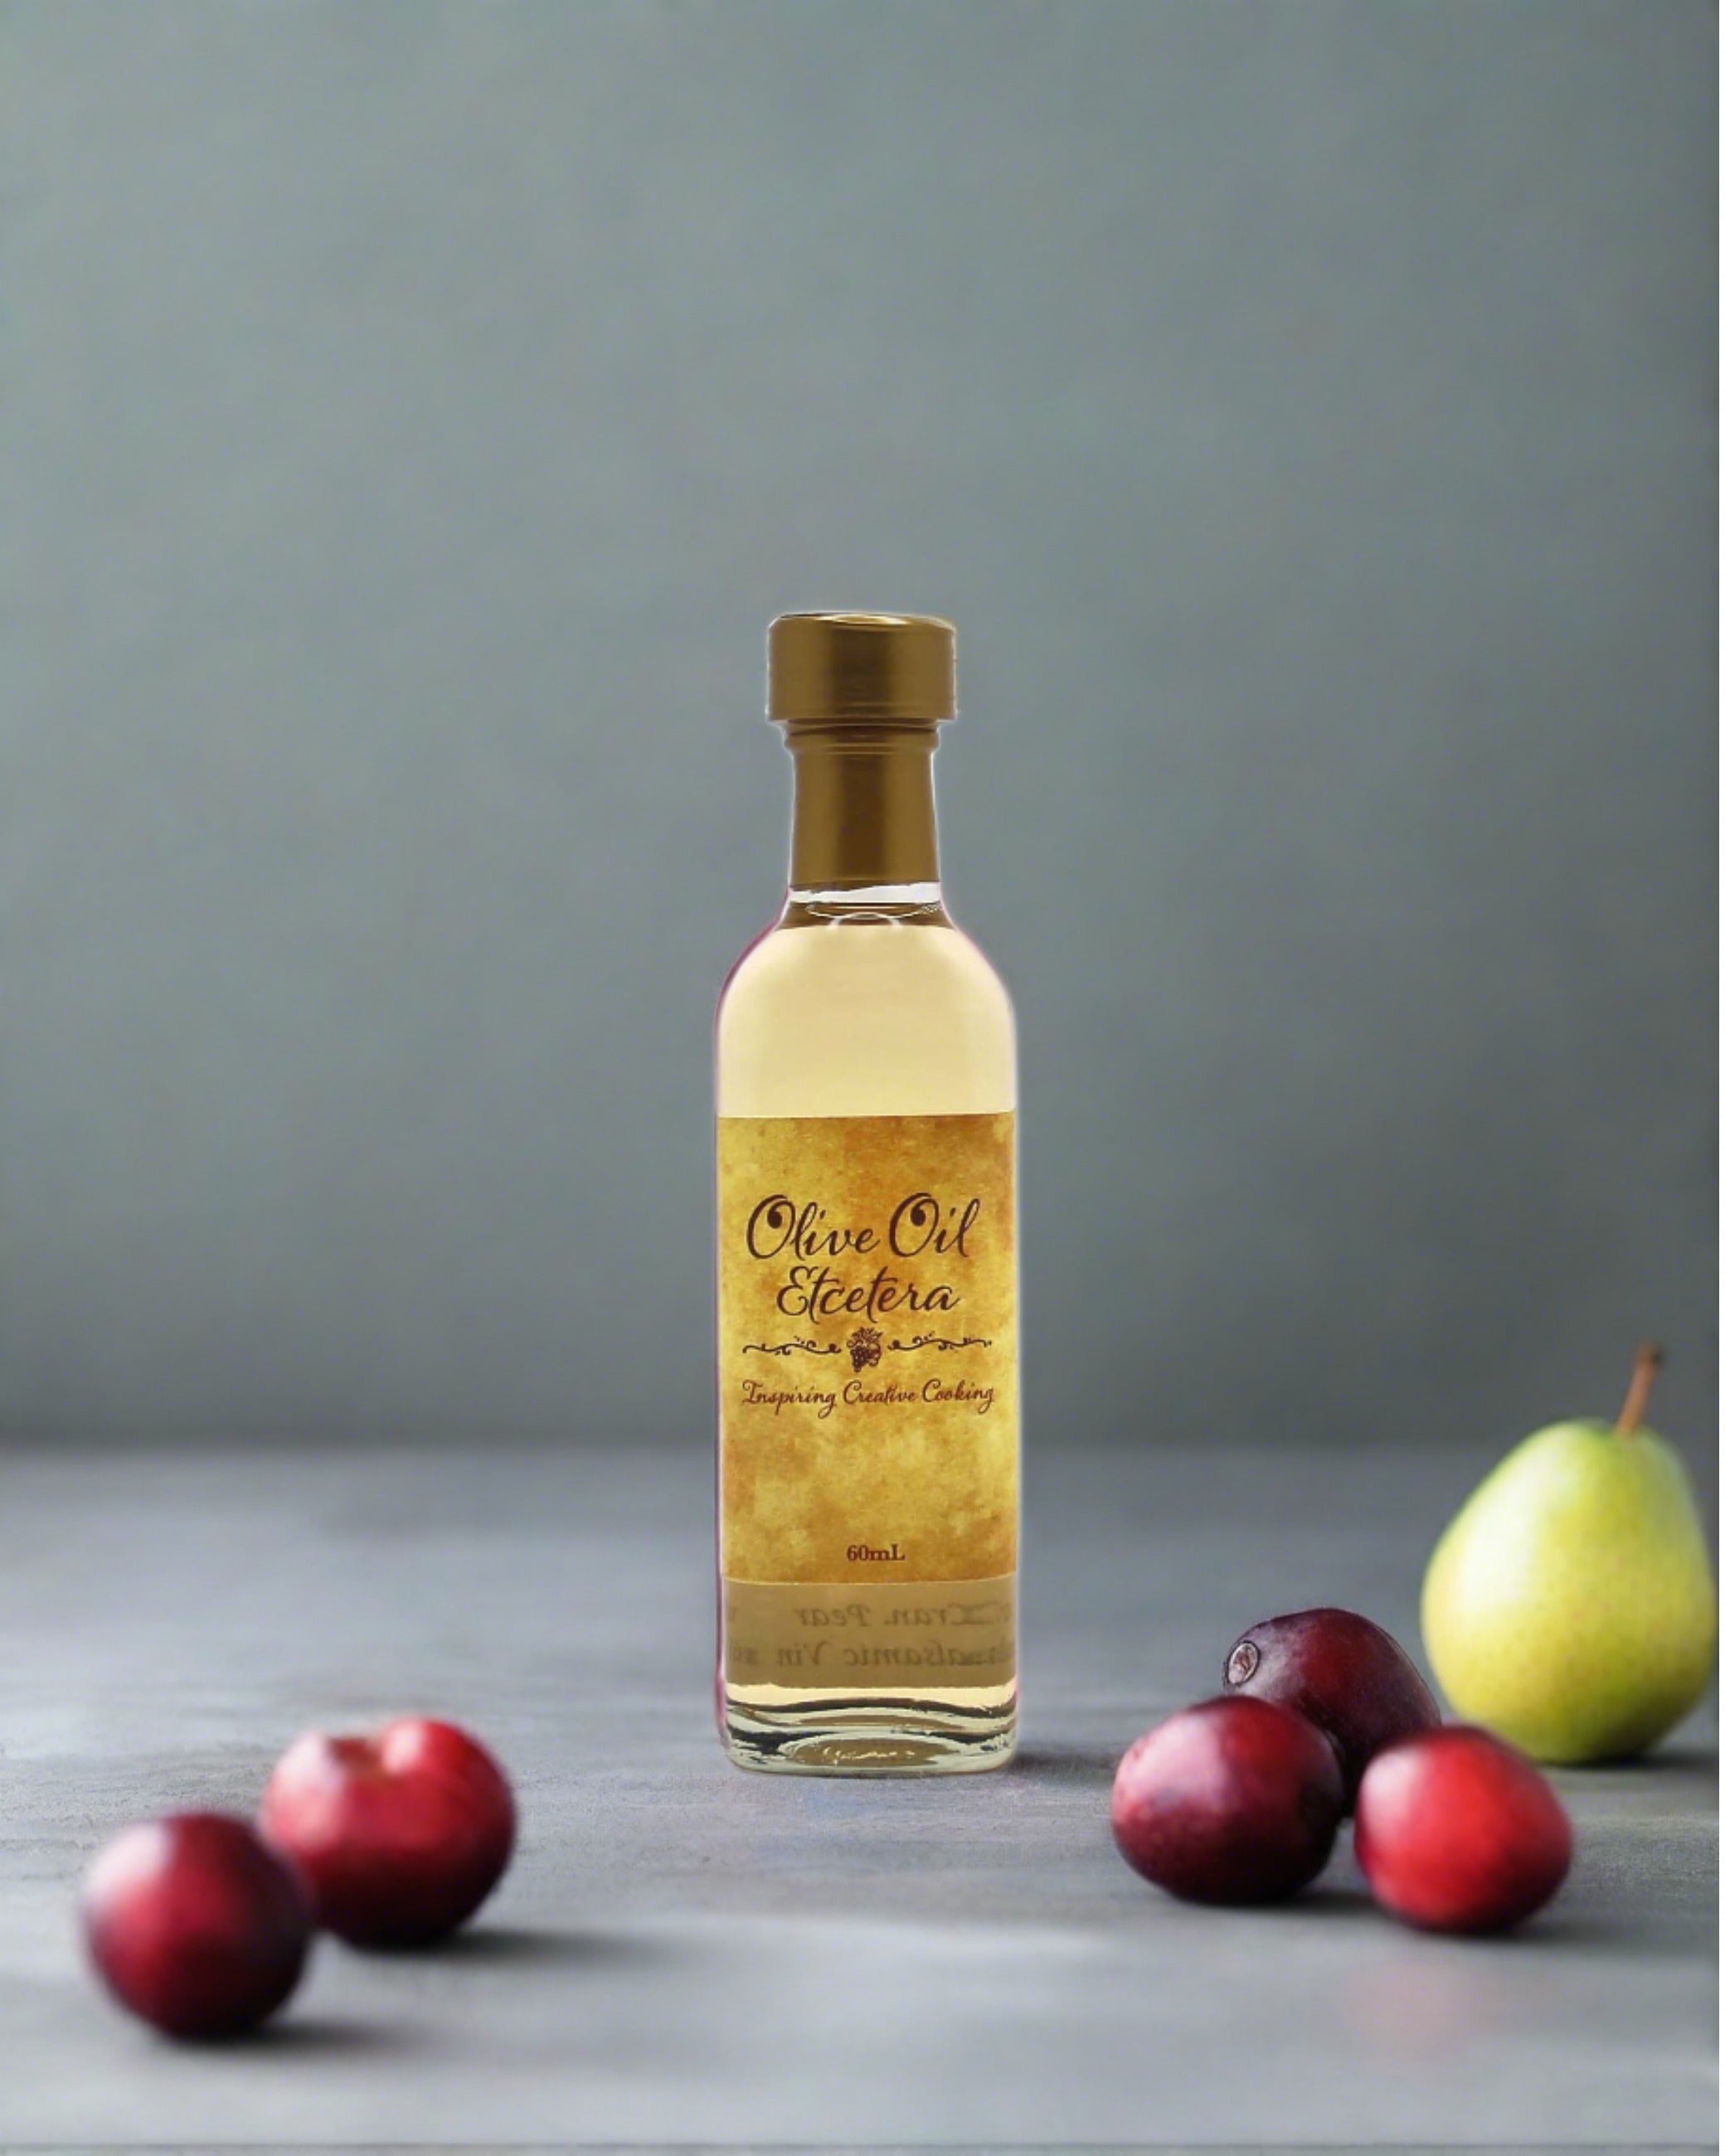 Sample Size 60mL Cranberry Pear Balsamic Vinegar- Olive Oil Etcetera- Bucks County's Gourmet Olive Oil and Vinegar Store